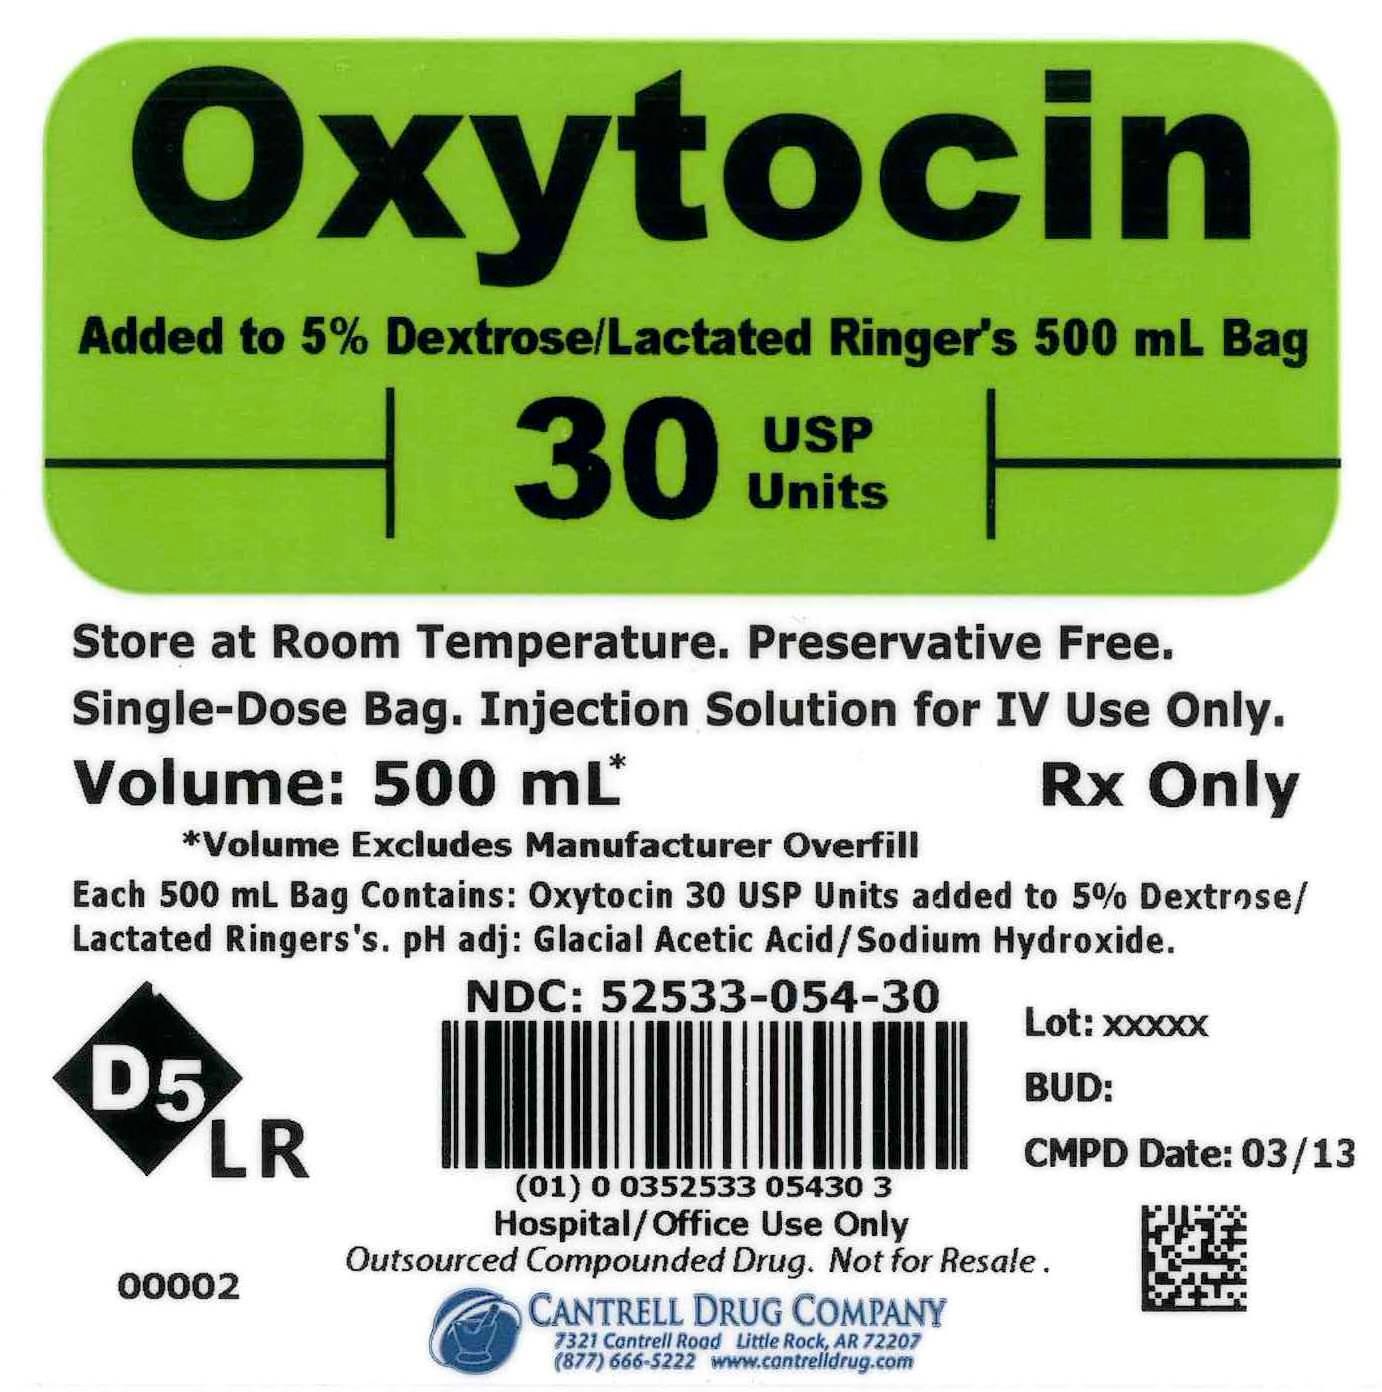 Oxytocin 30 USP Units Added to 5% Dextrose/Lactated Ringer's 500 mL Bag